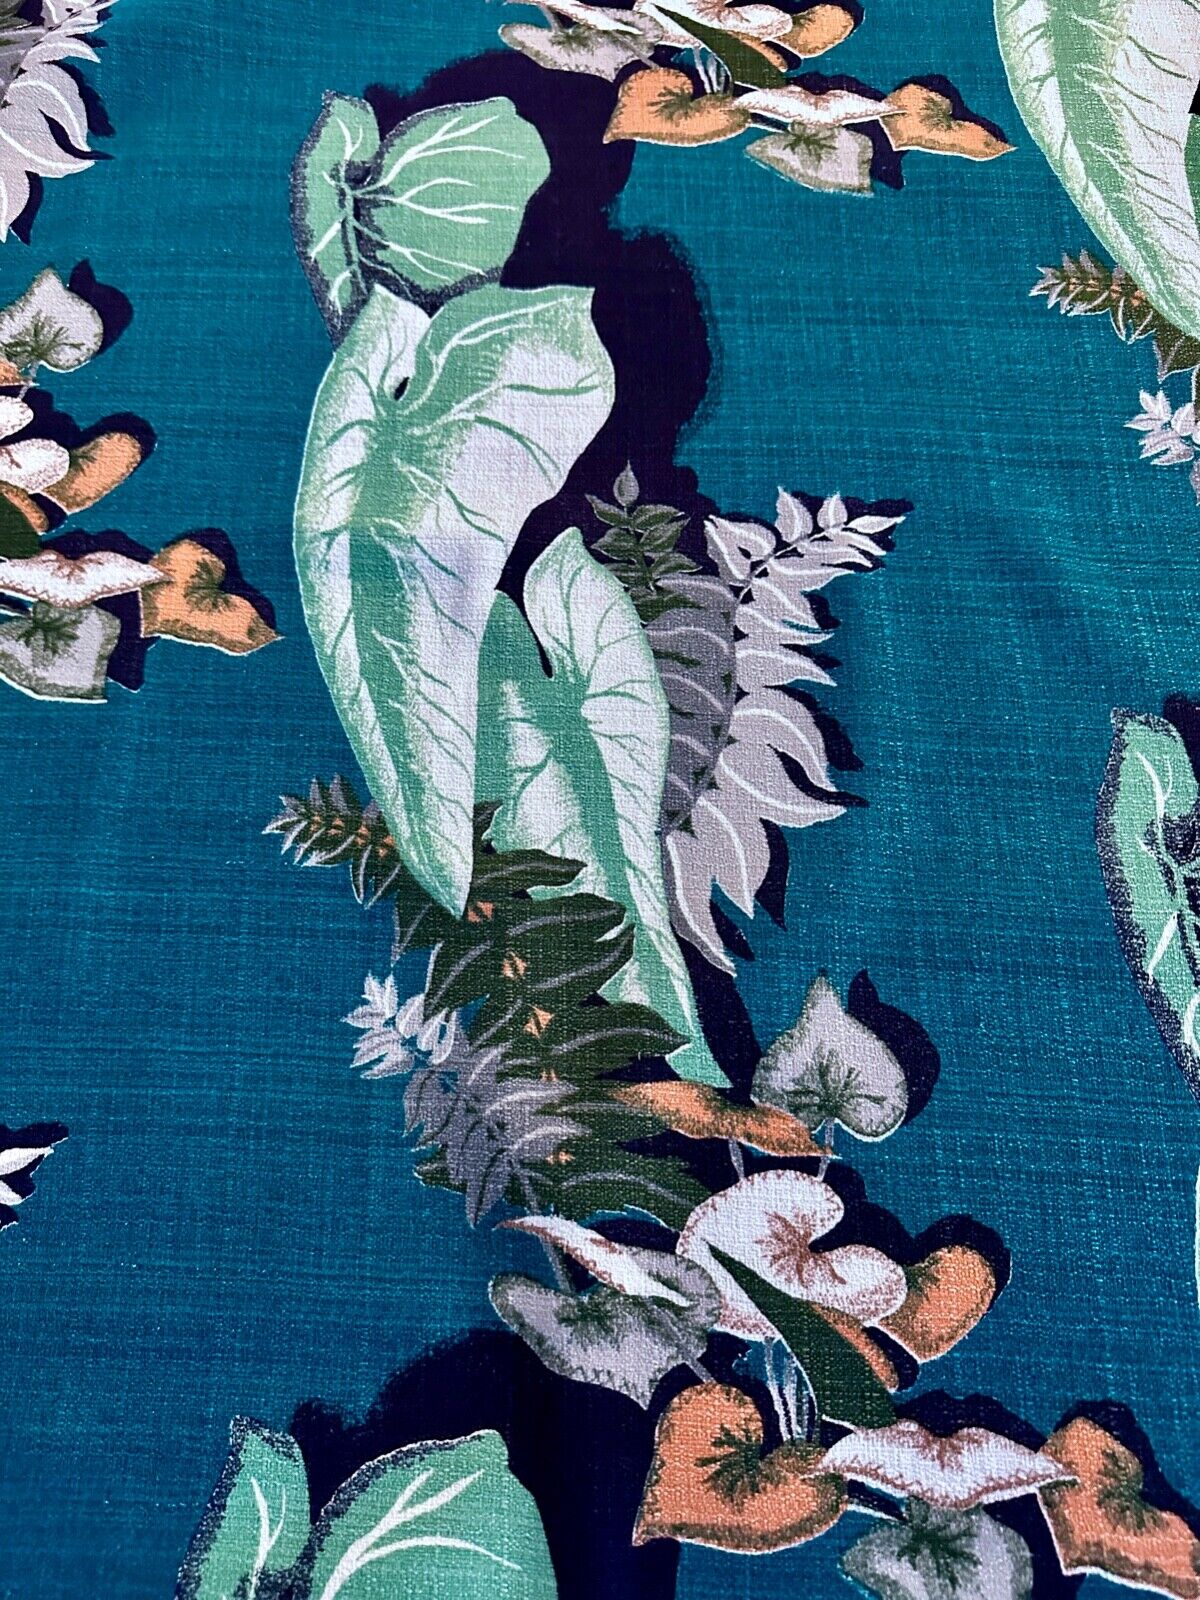 South Beach Art Deco Mint Jadeite Caladium Leaf on Teal Barkcloth Vintage Fabric